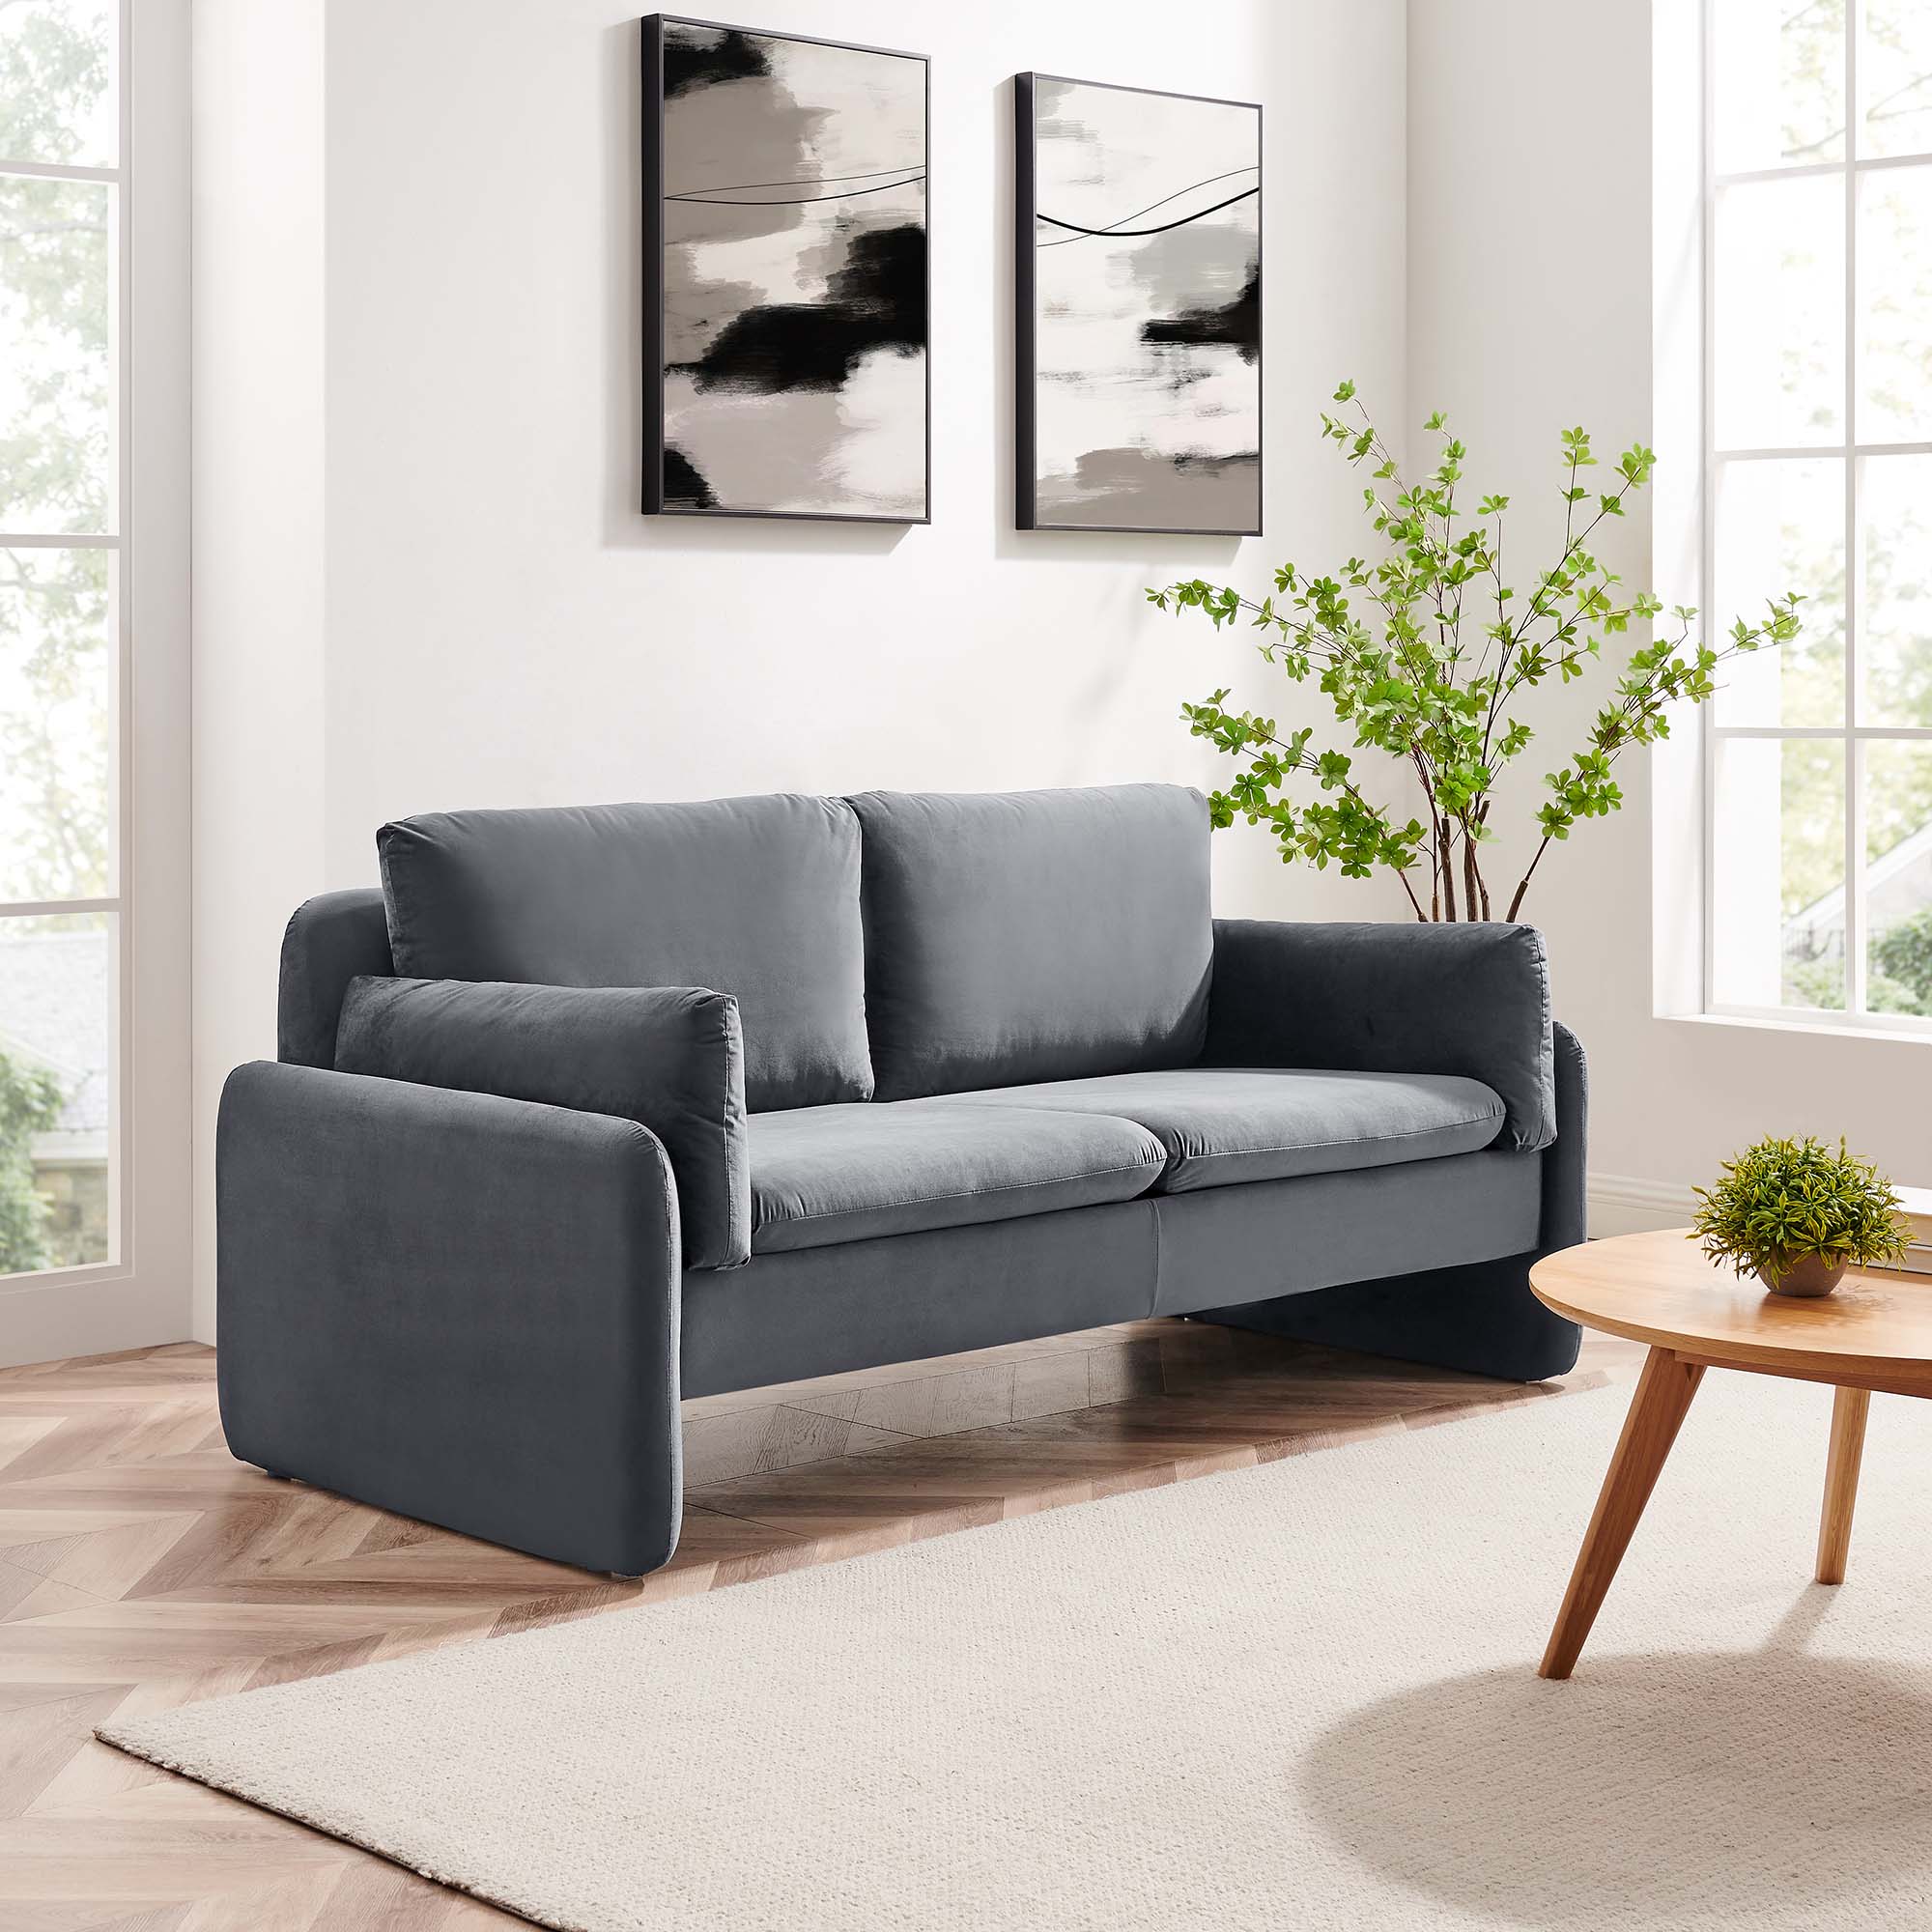 Clapham 2-Seater Grey Velvet Fabric Sofa